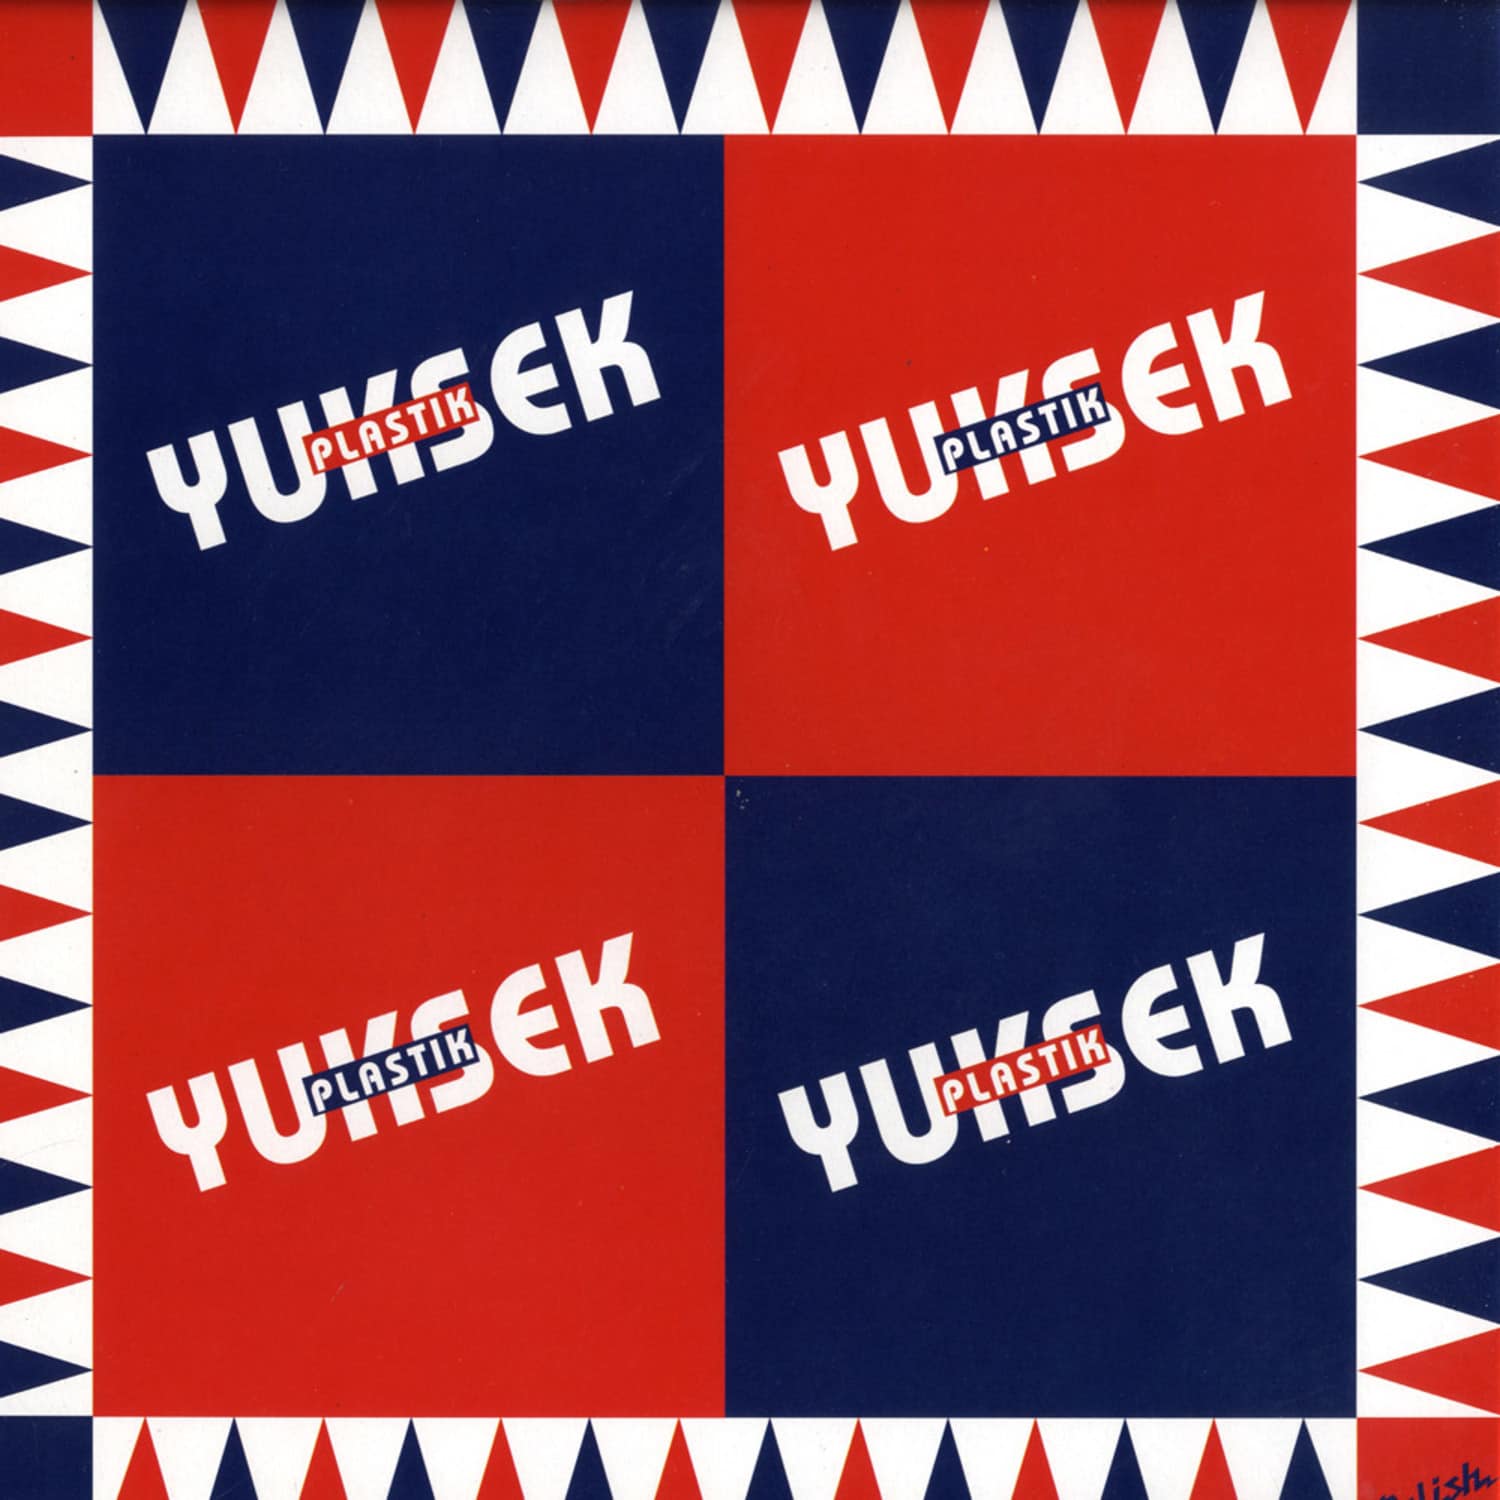 Yuksek - SORRY / PLASTIK